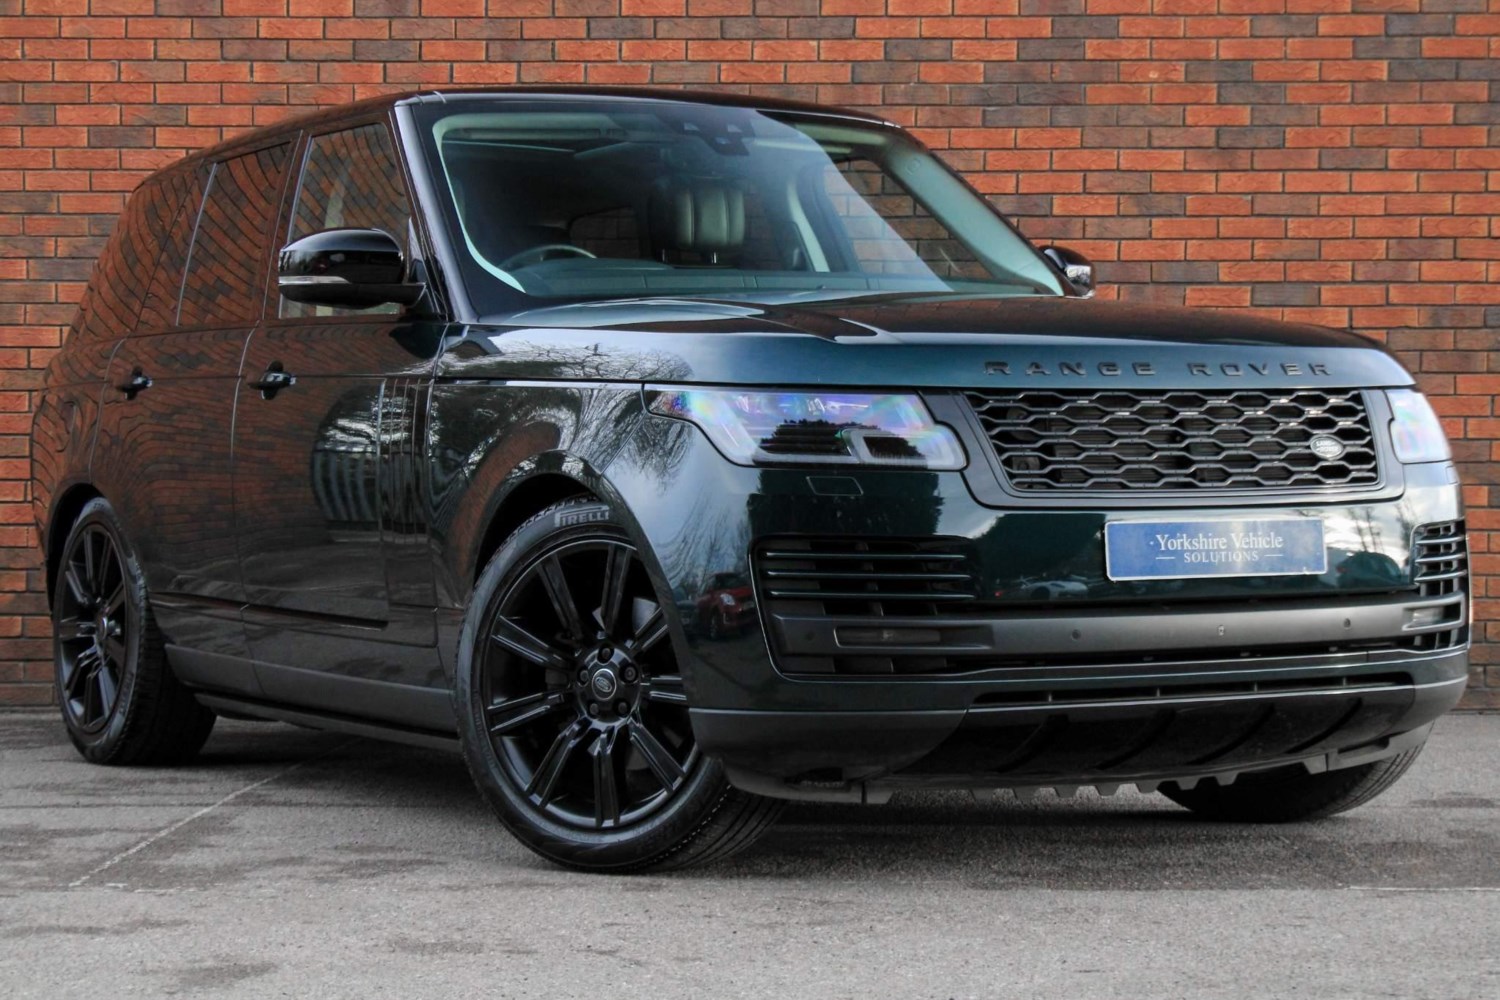 Land Rover Range Rover Listing Image